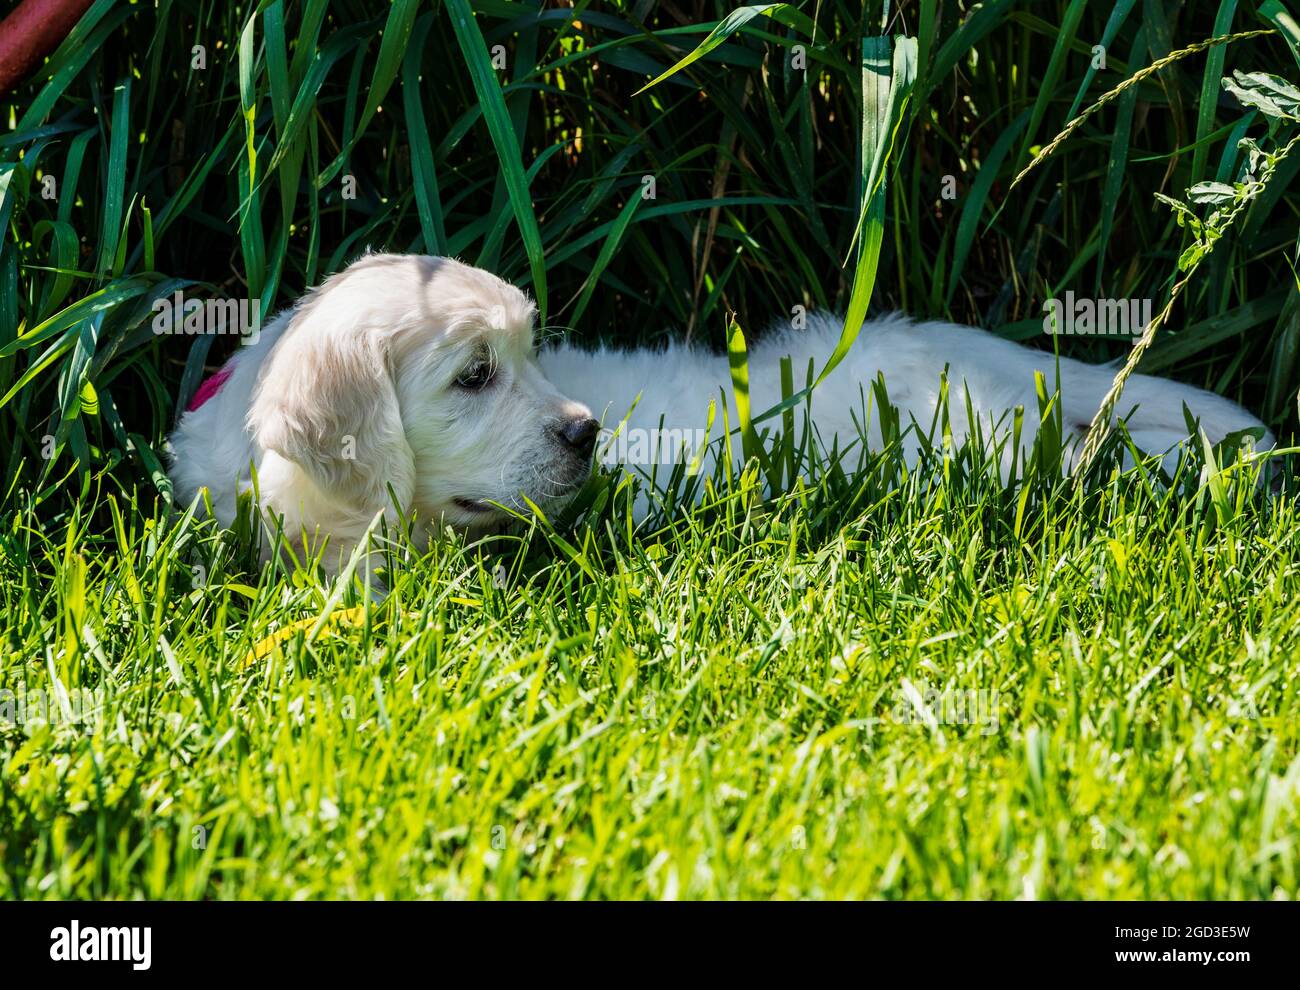 Platinum, or Cream colored Golden Retriever puppies on grassy lawn Stock Photo